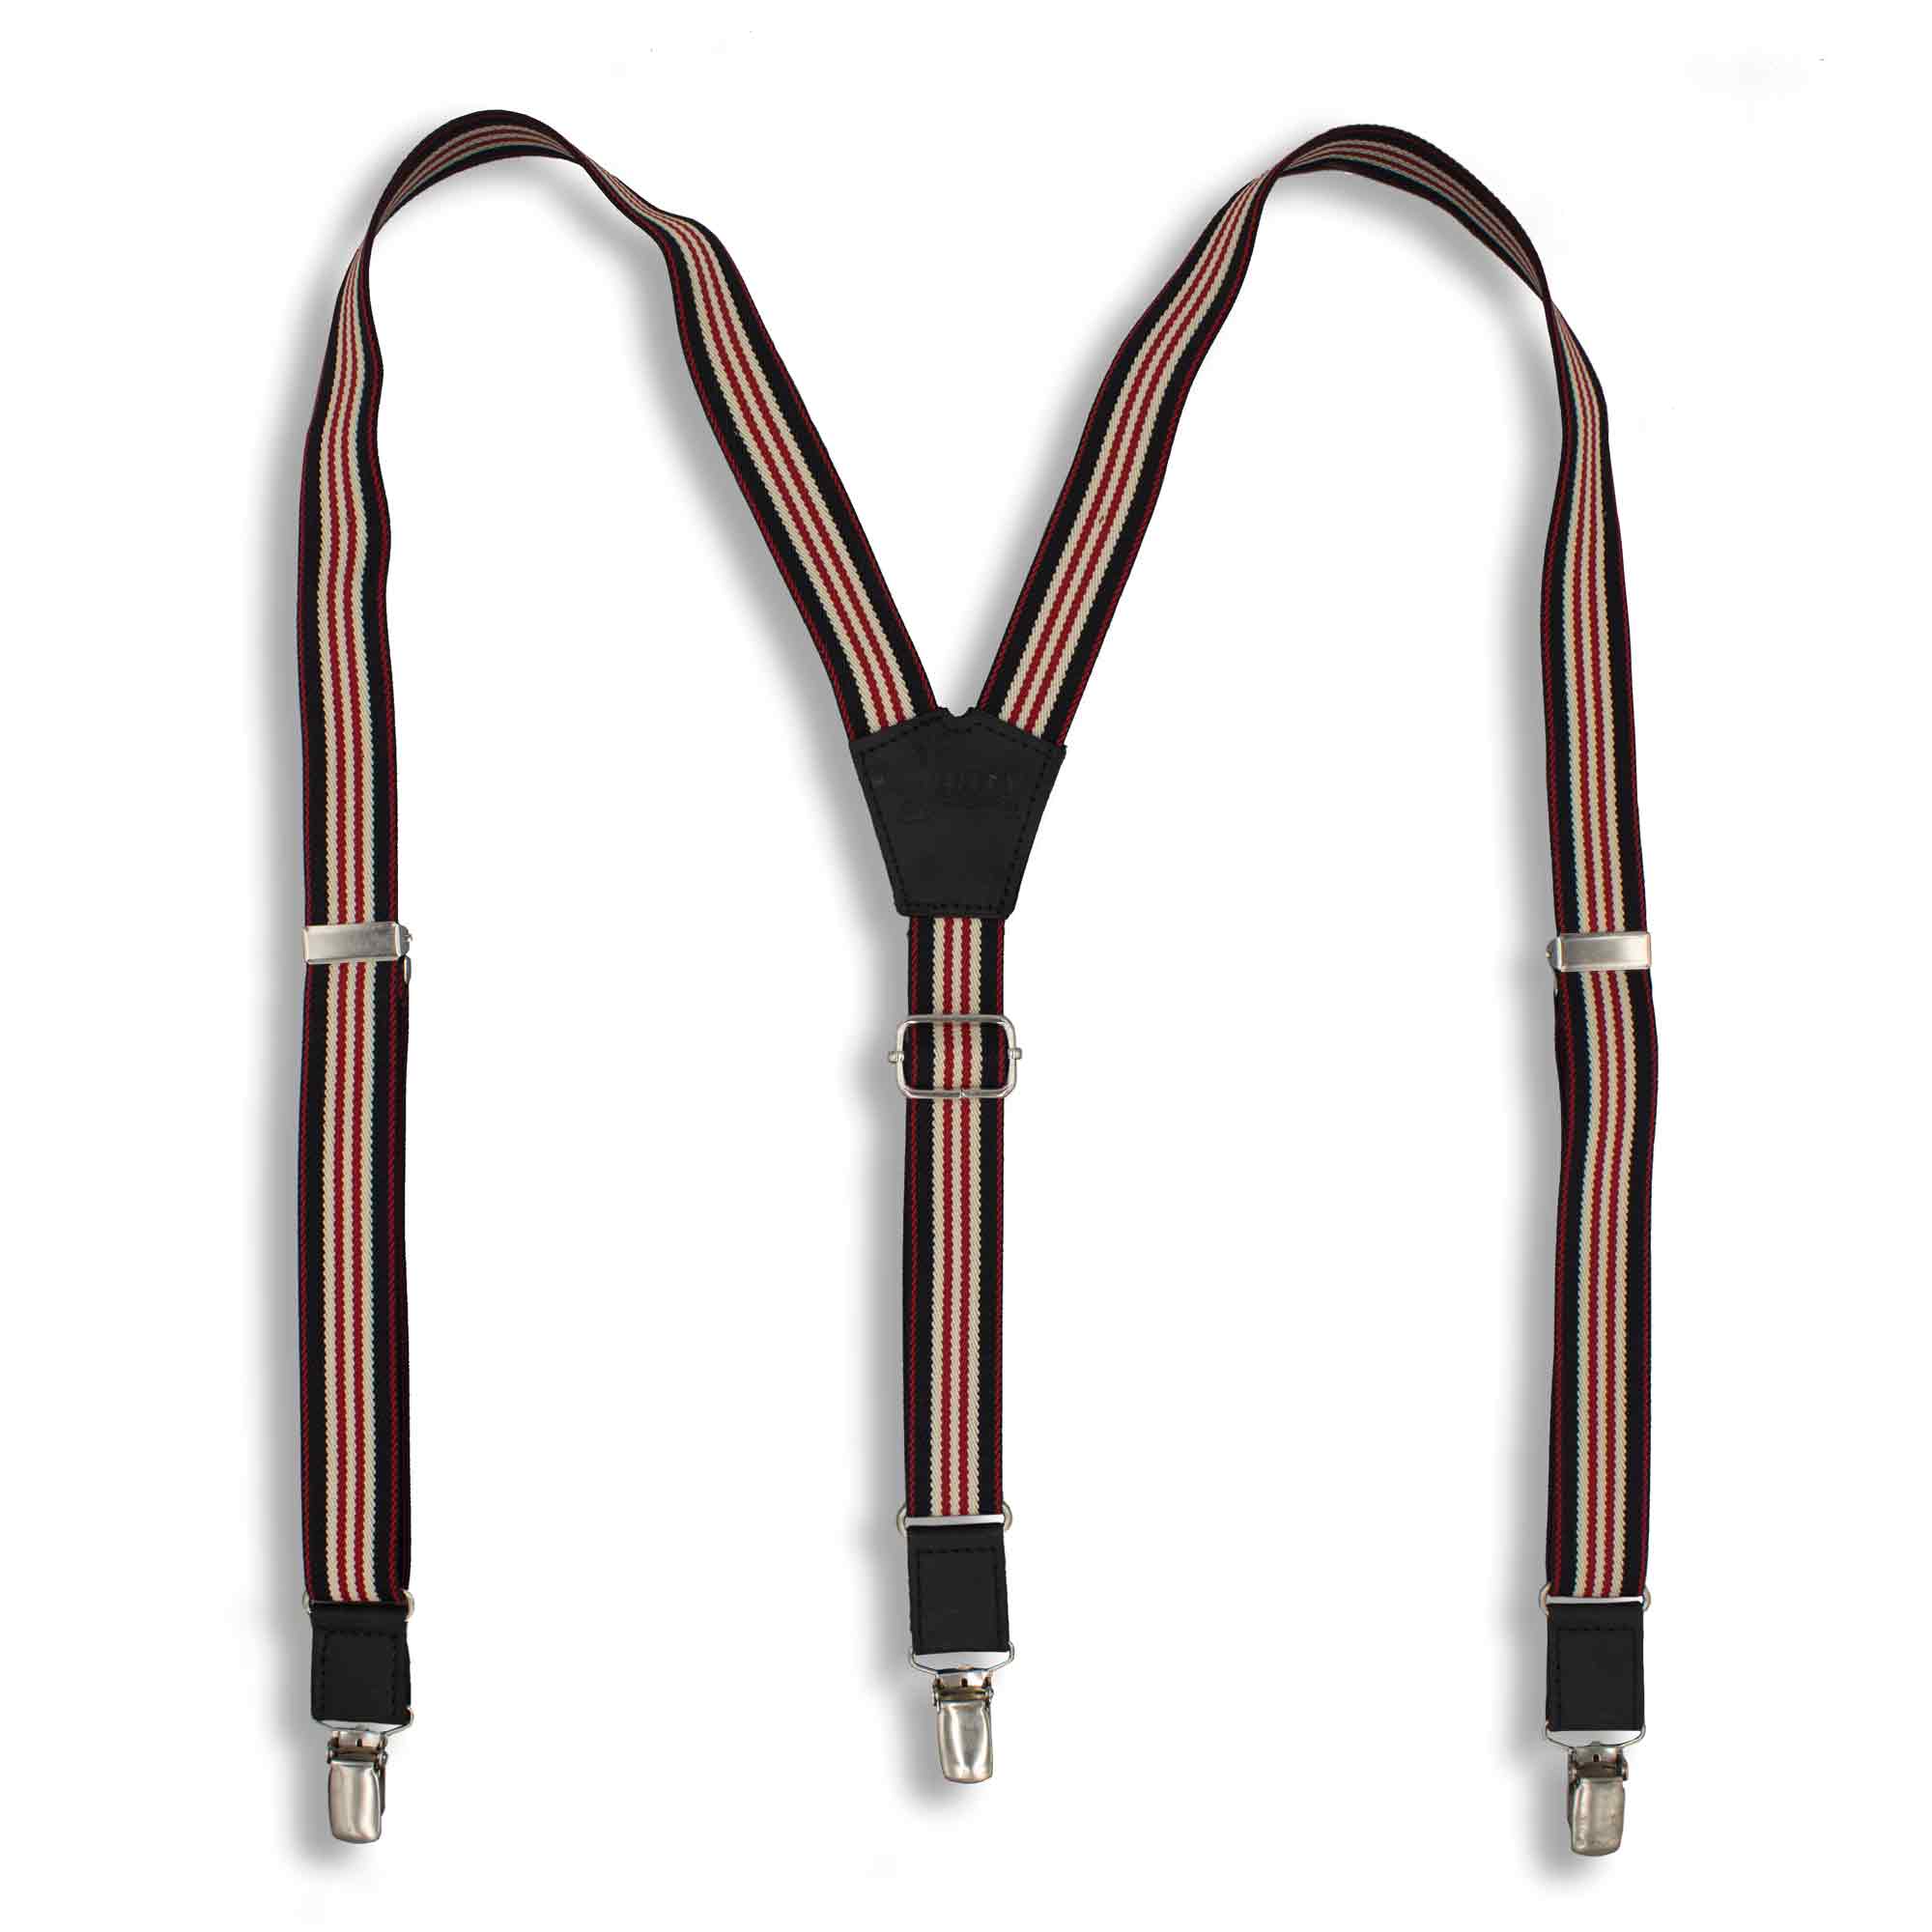 Le Mans Racing Suspenders slim straps (1 inch/2.54 cm) - Wiseguy Suspenders